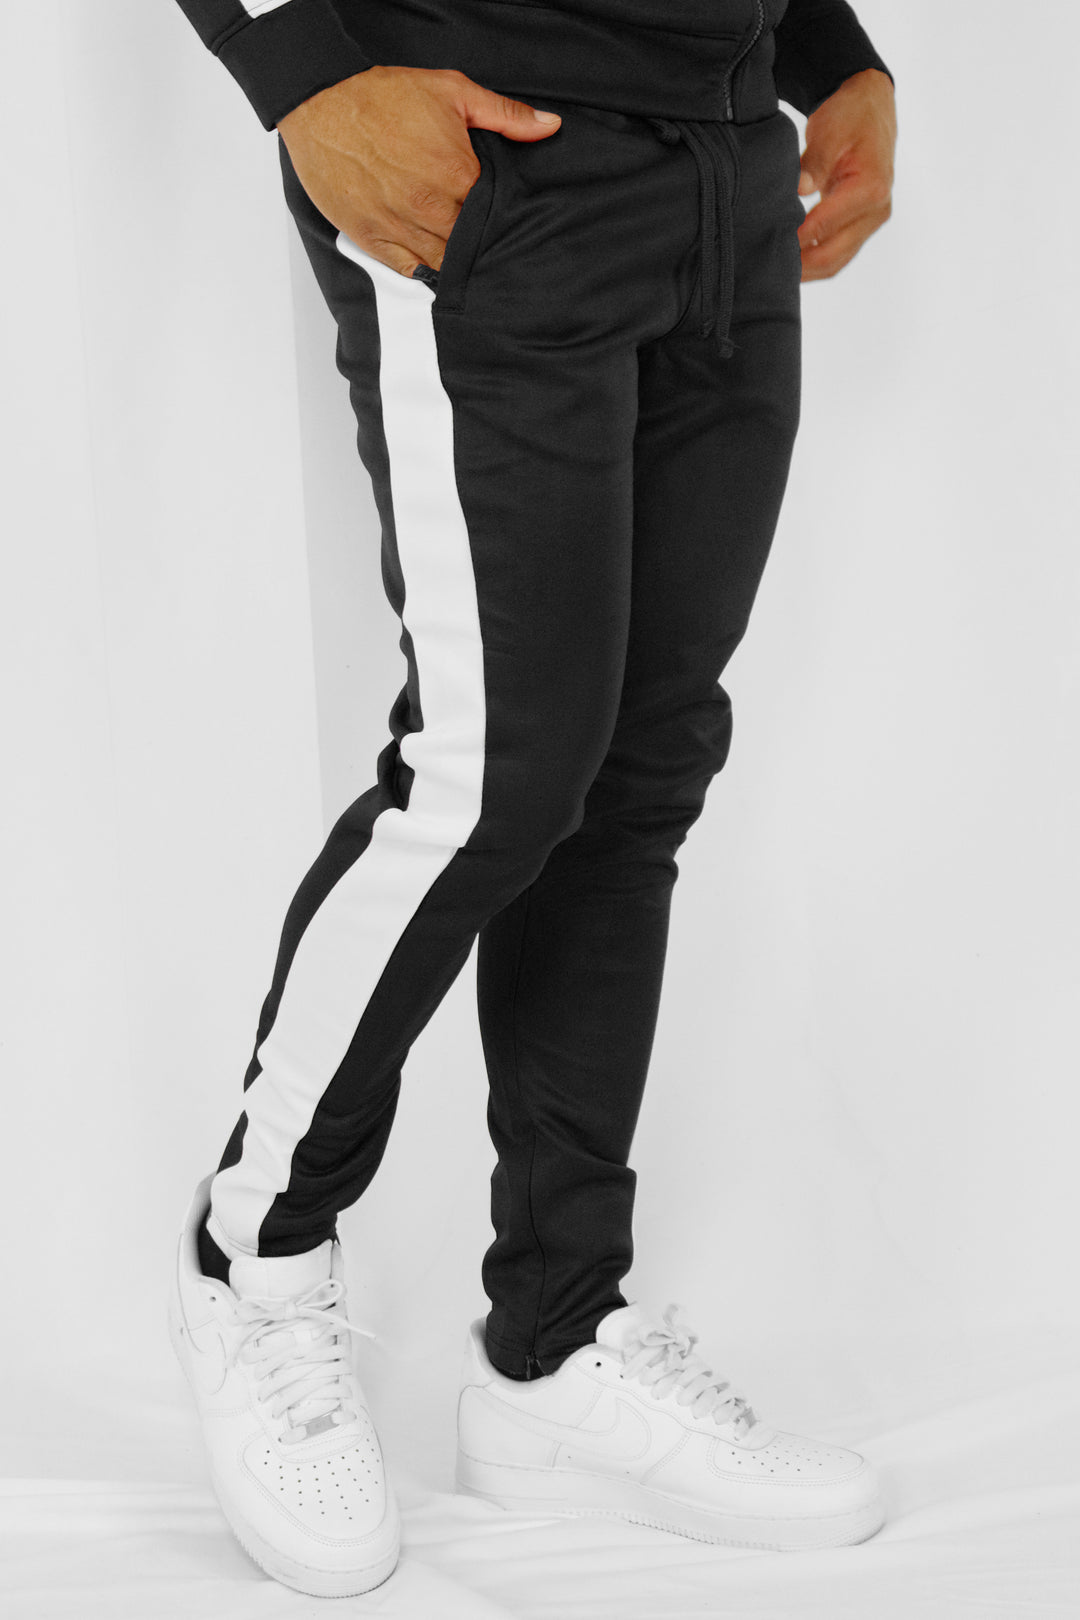 Outside Solid One Stripe Track Pants (Black-White) - Zamage